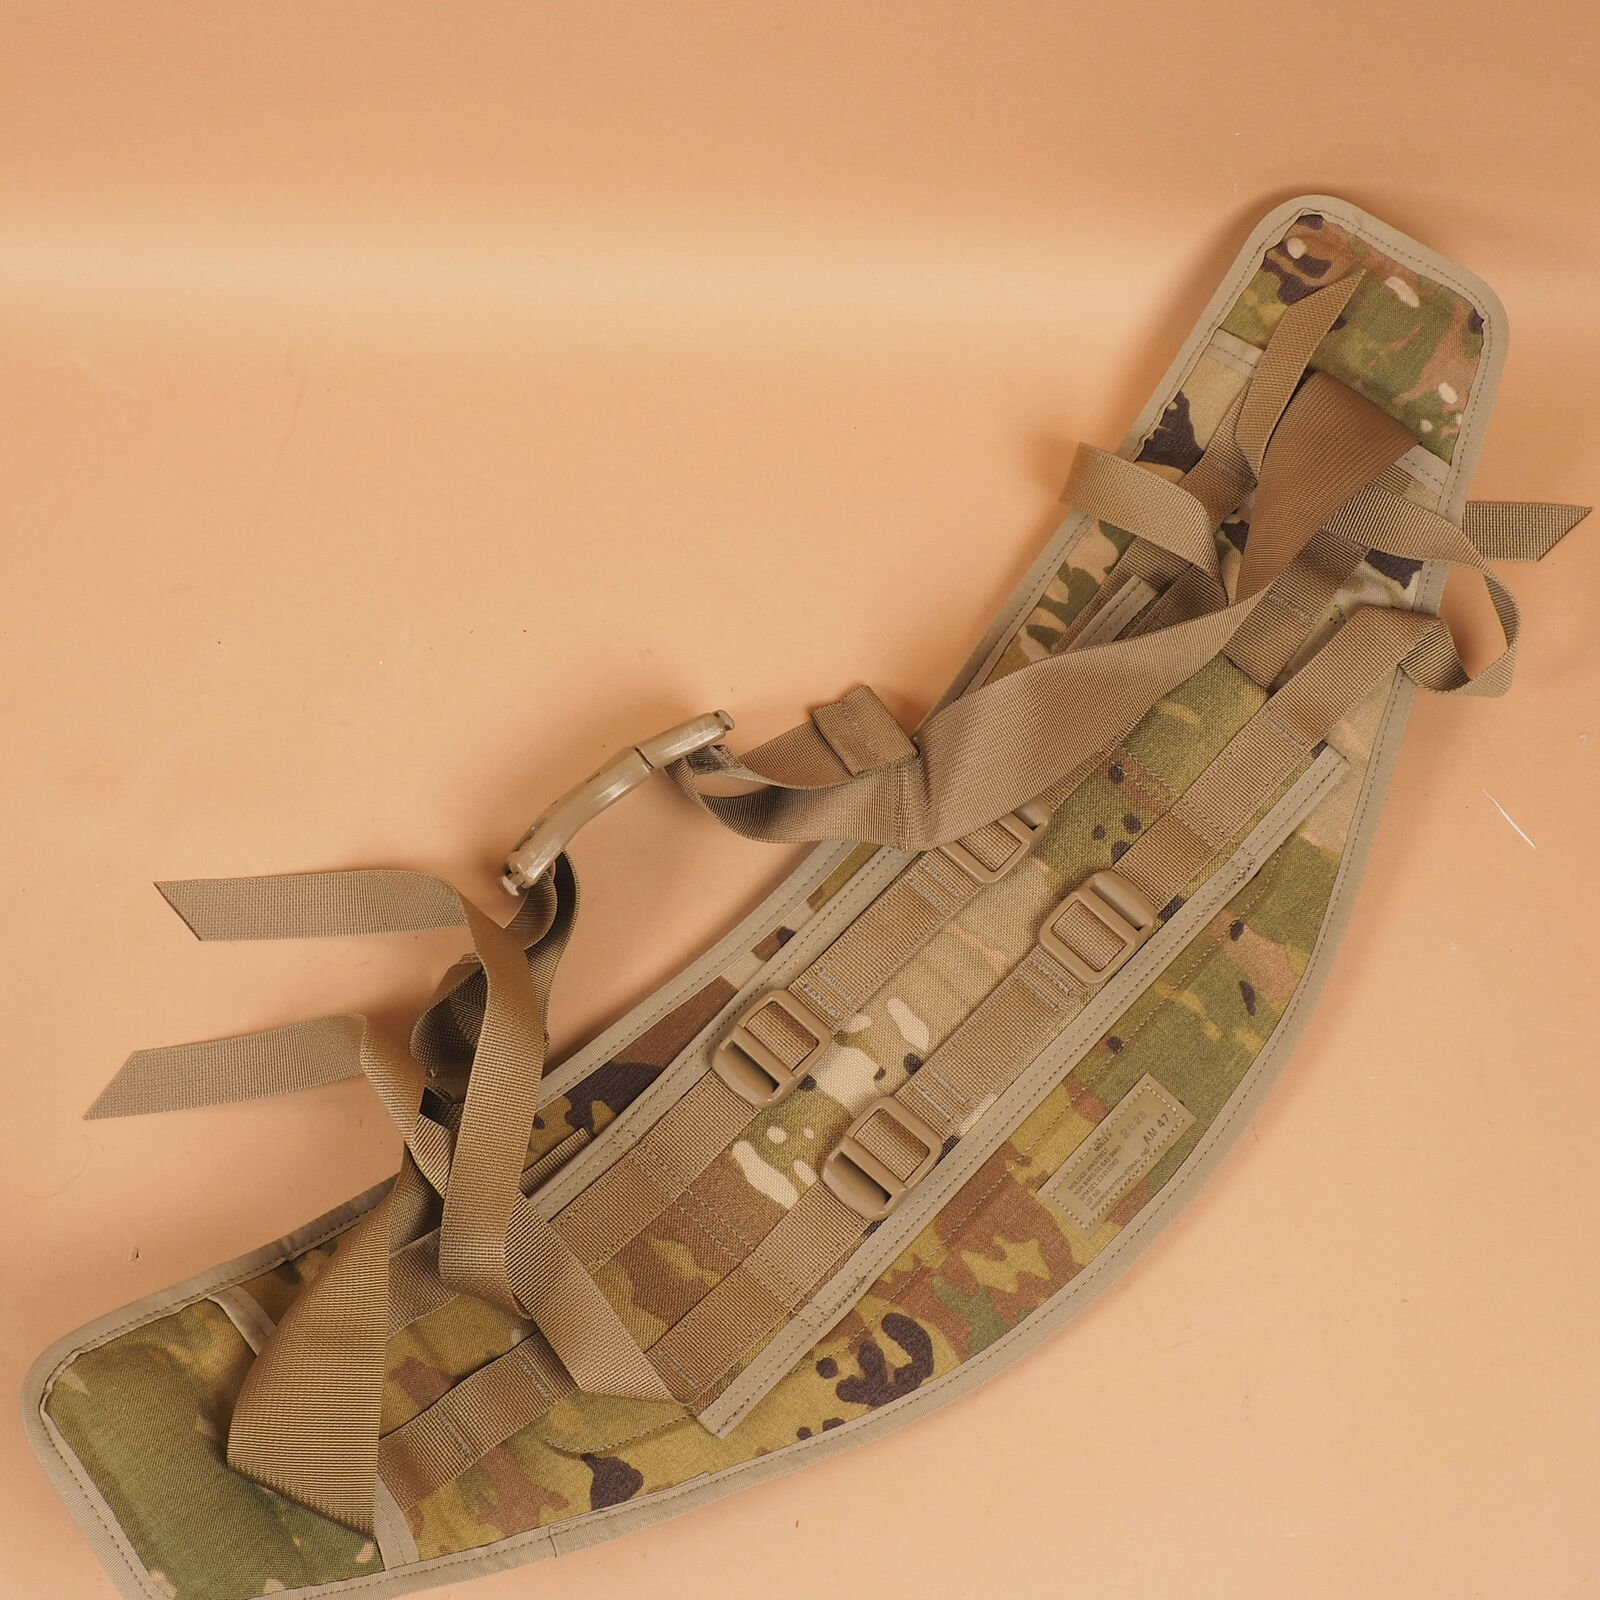 Military MOLLE II Backpack Rucksack Molded Kidney Belt Waistbelt Scorpion Camo